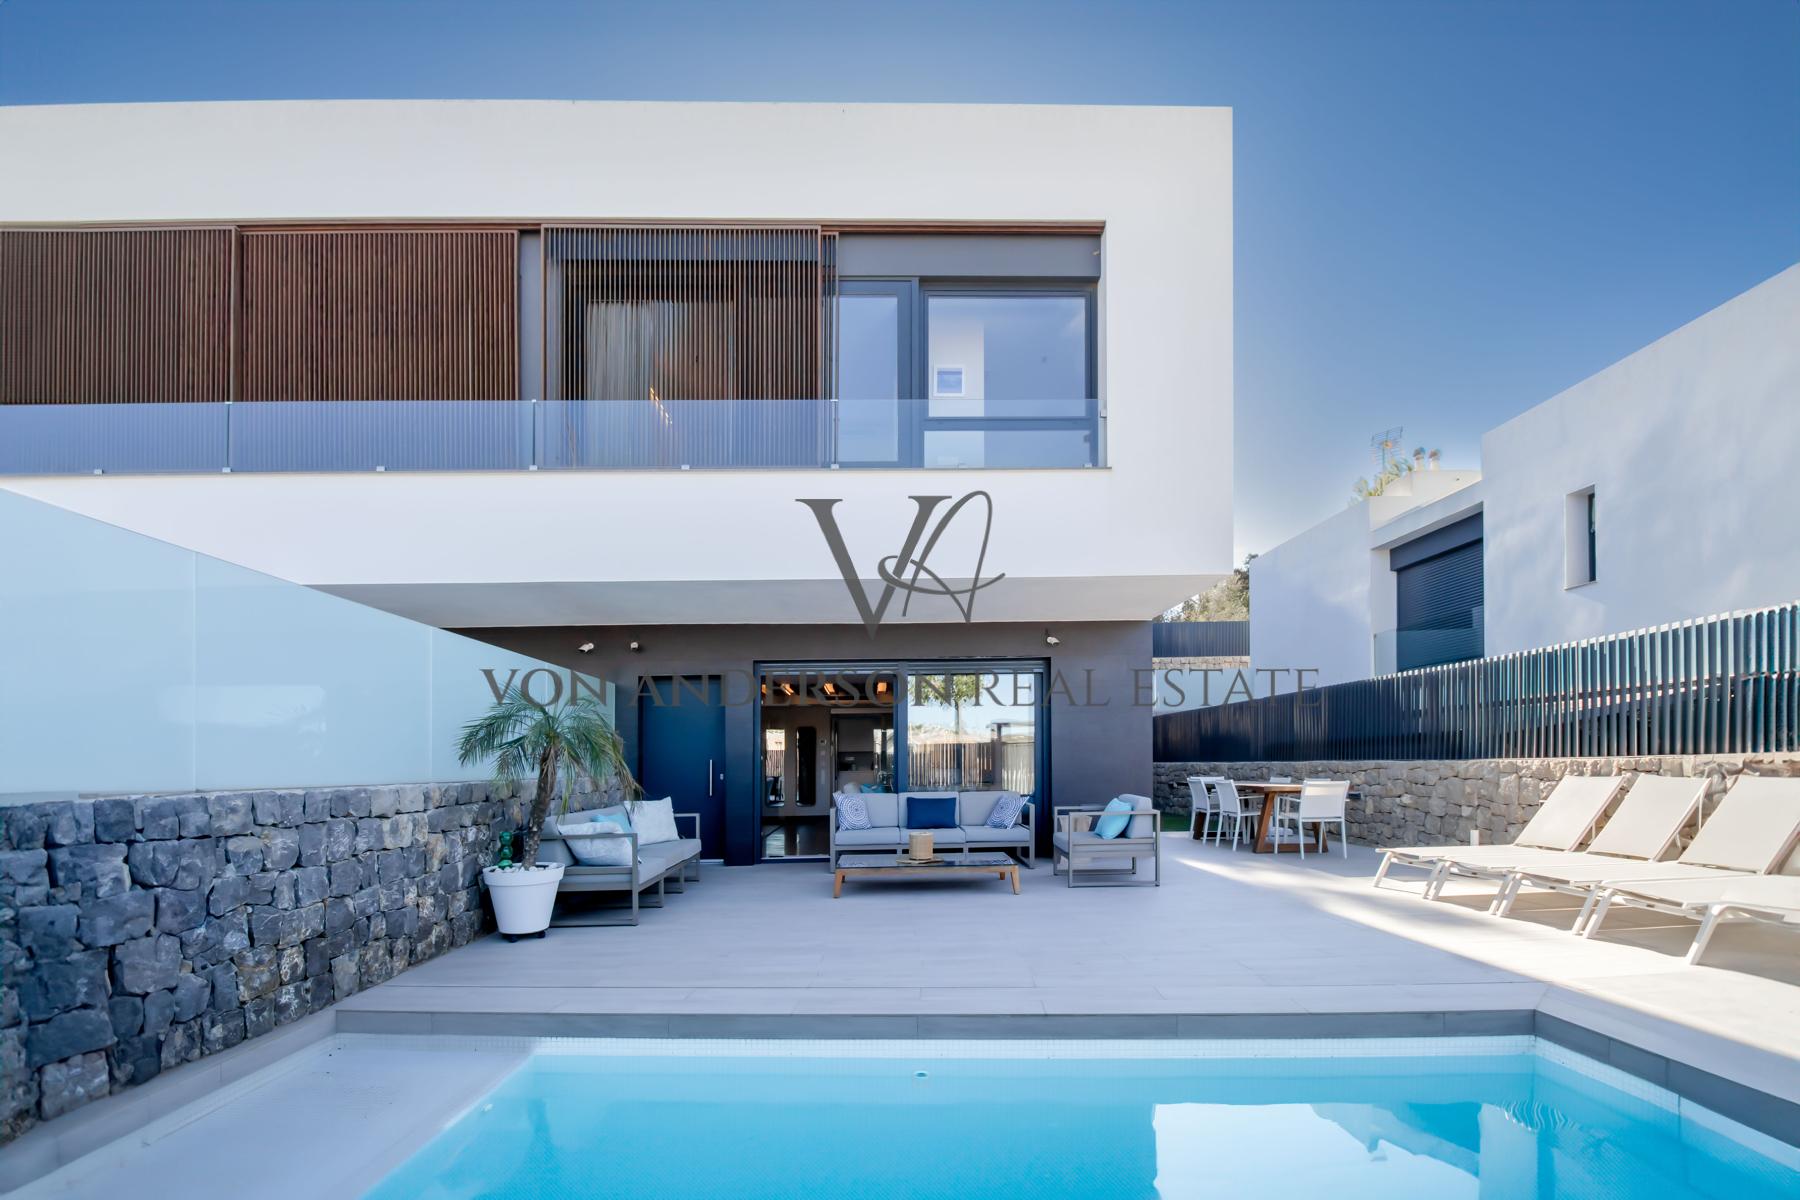 Modern Semi-Detached Villa featuring a Pool near Marinas and Talamanca Beach, ref. VA1049, for sale in Ibiza by Von Anderson Real Estate